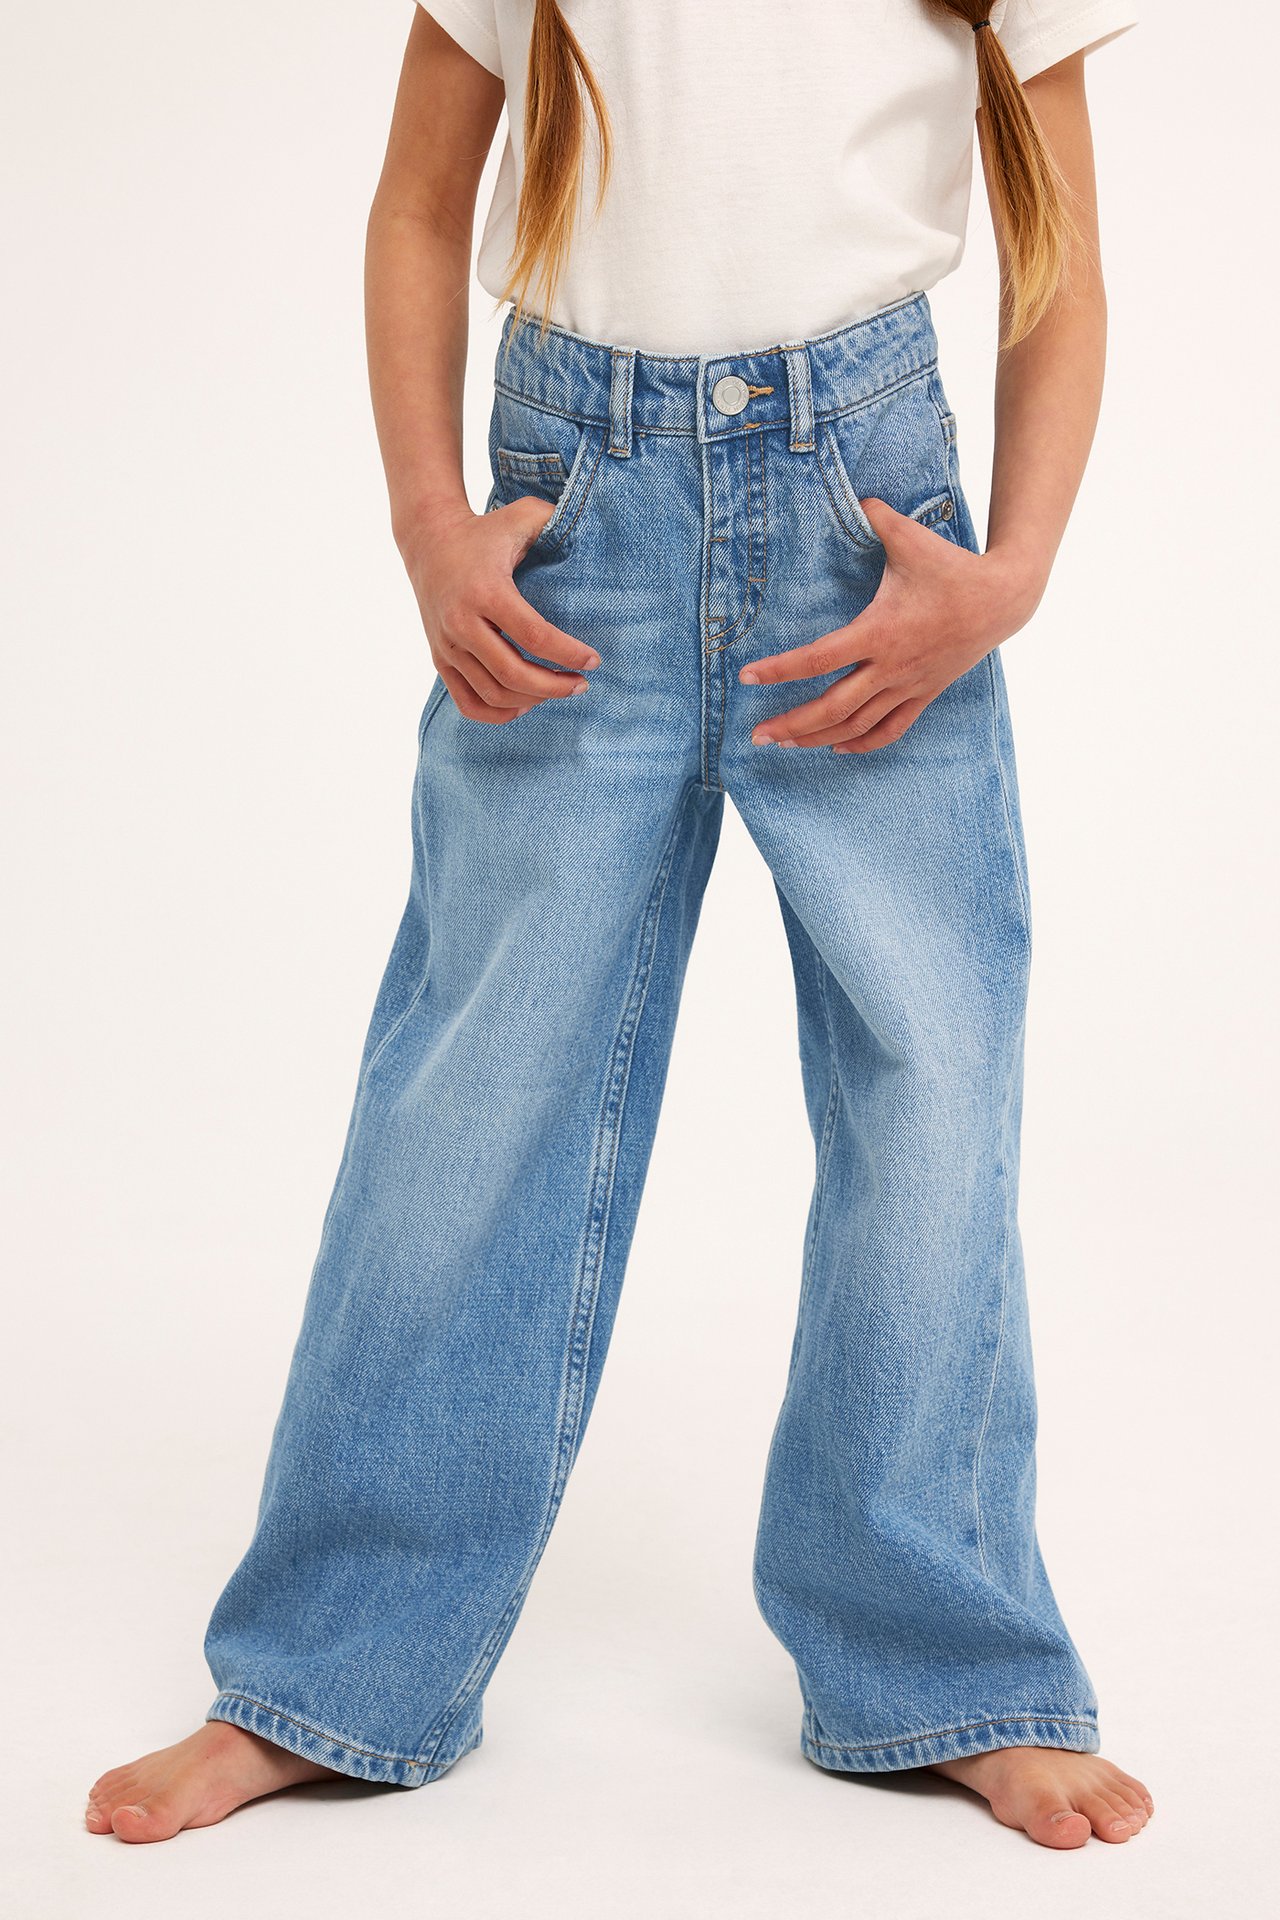 Vida jeans - Denim - 2